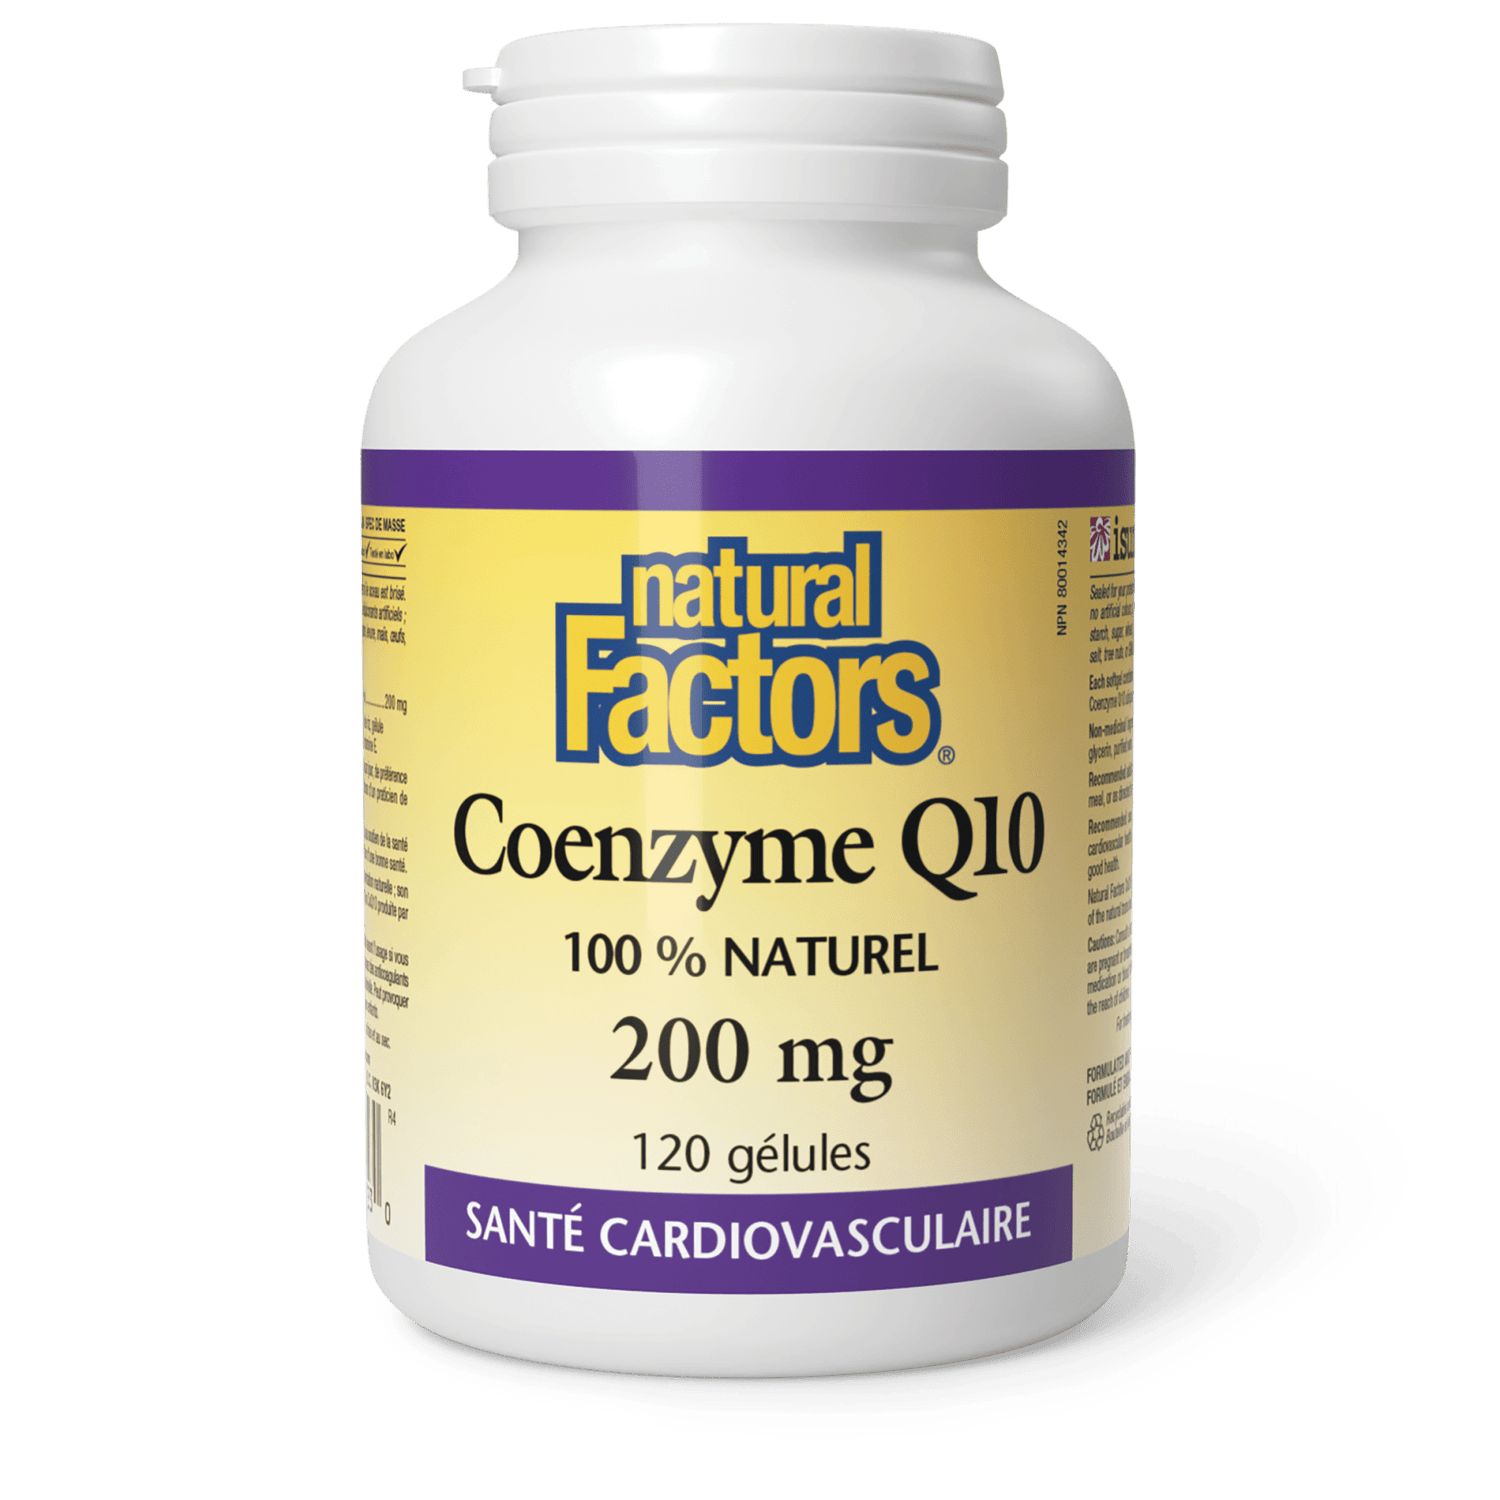 Coenzyme Q10 100 % naturel 200 mg, Natural Factors|v|image|20723